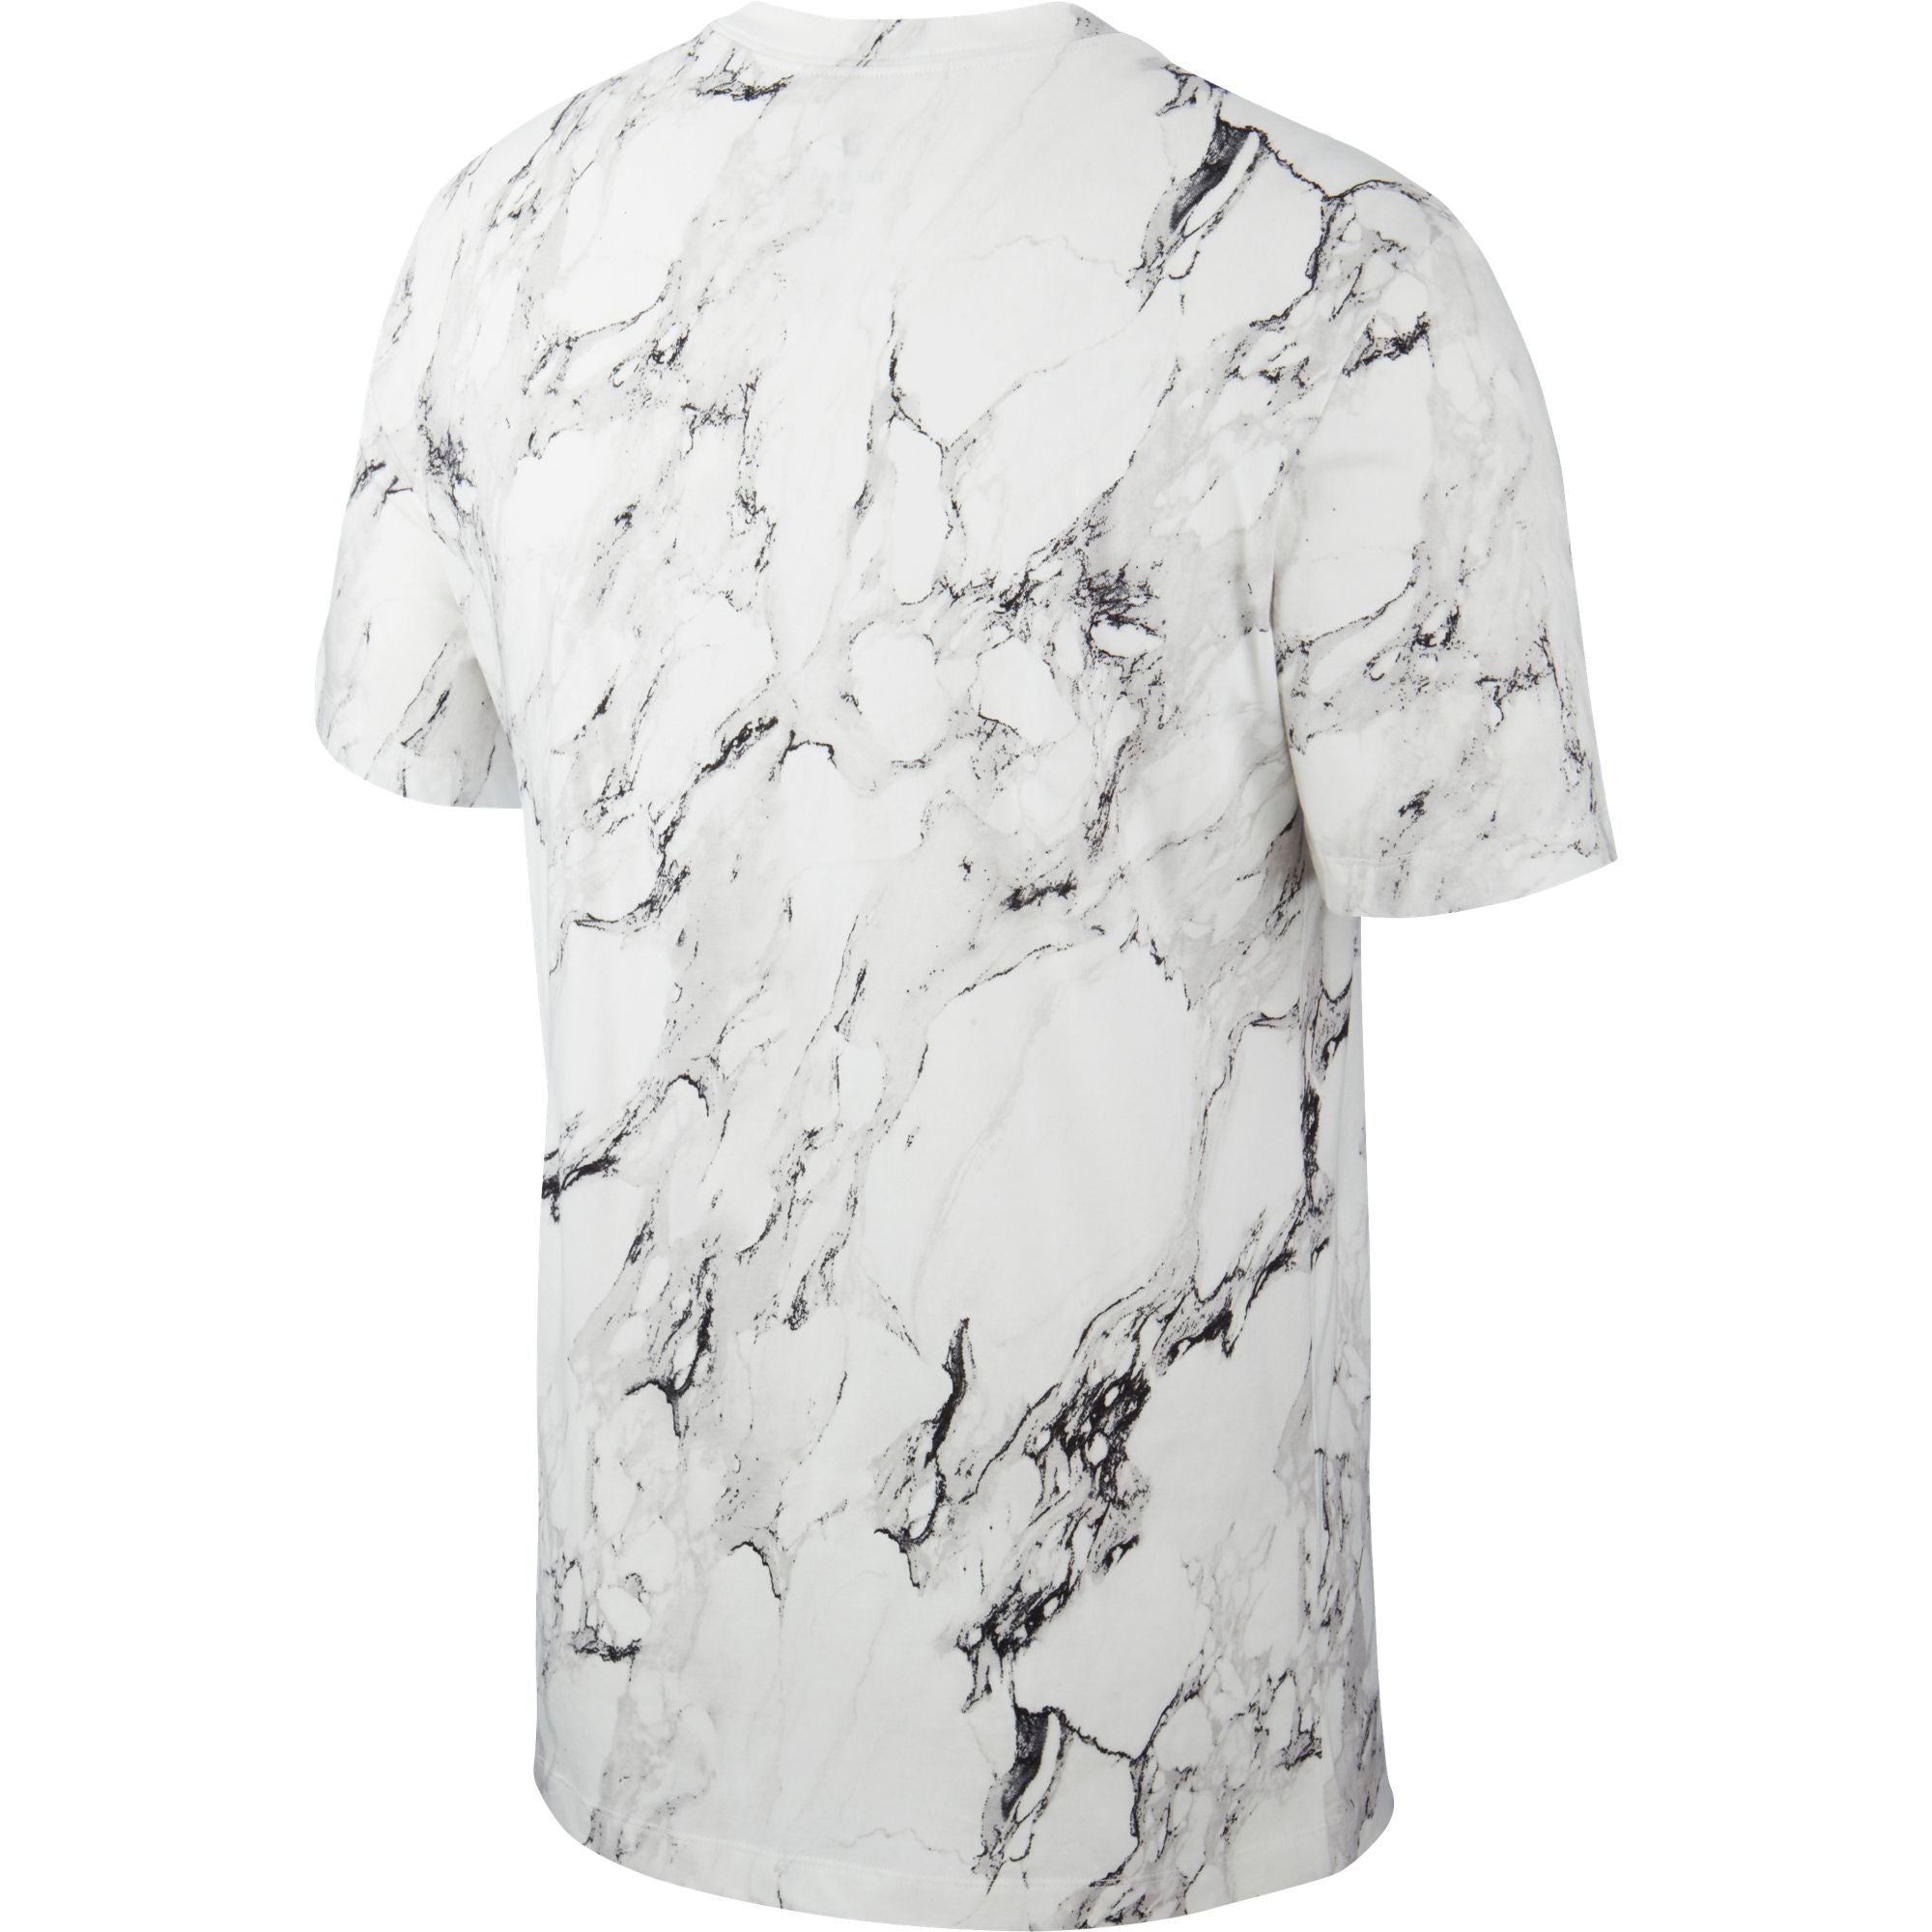 nike marble shirt